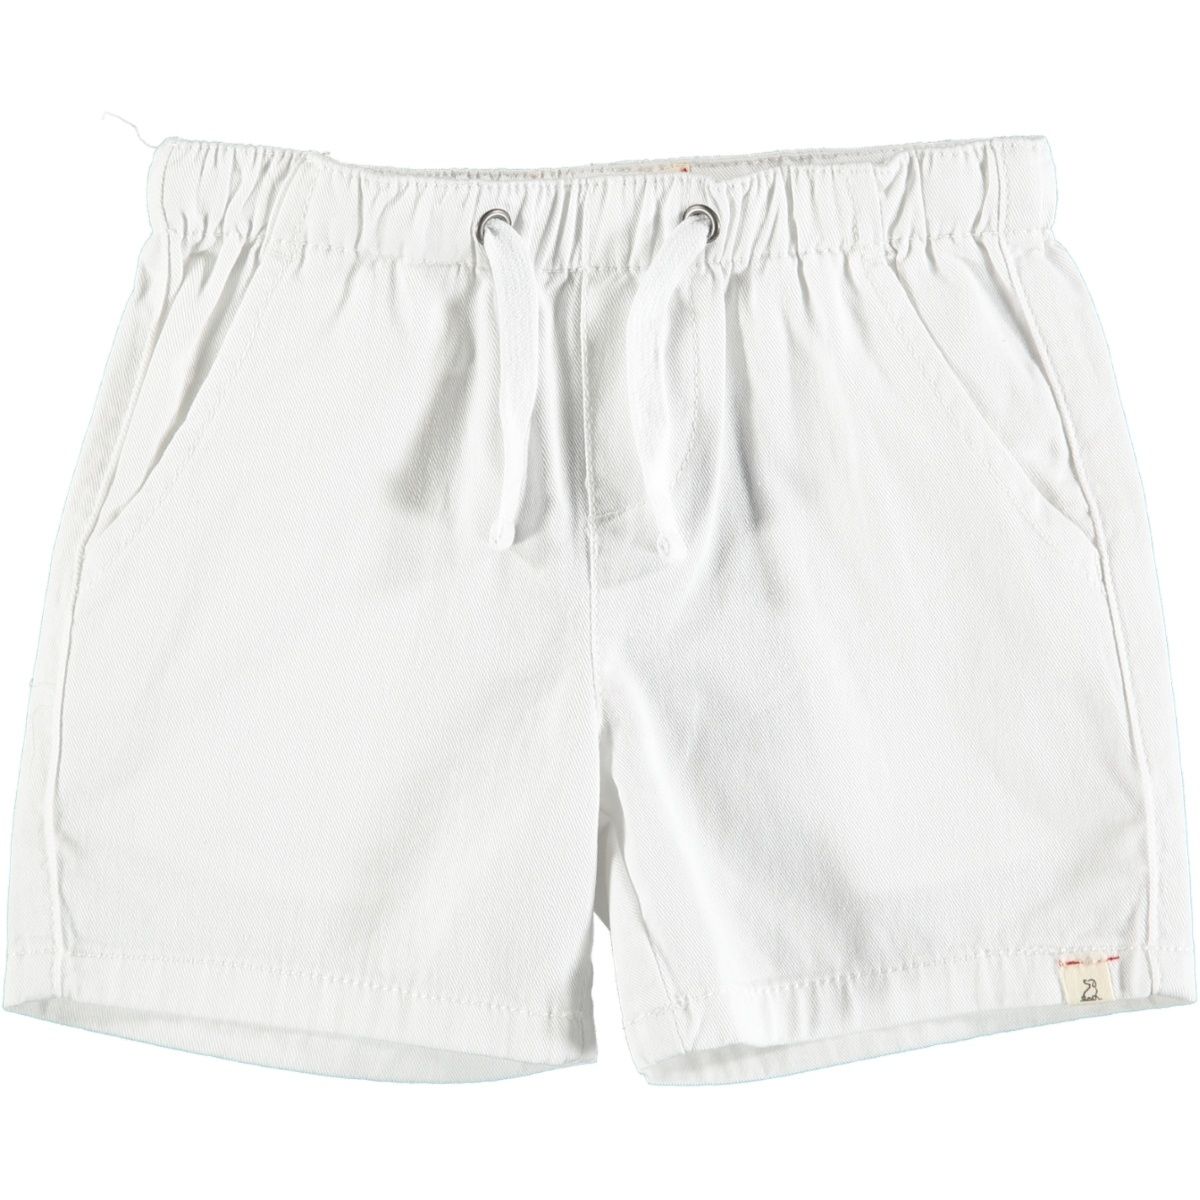 White Hugo Twill Shorts - Twinkle Twinkle Little One